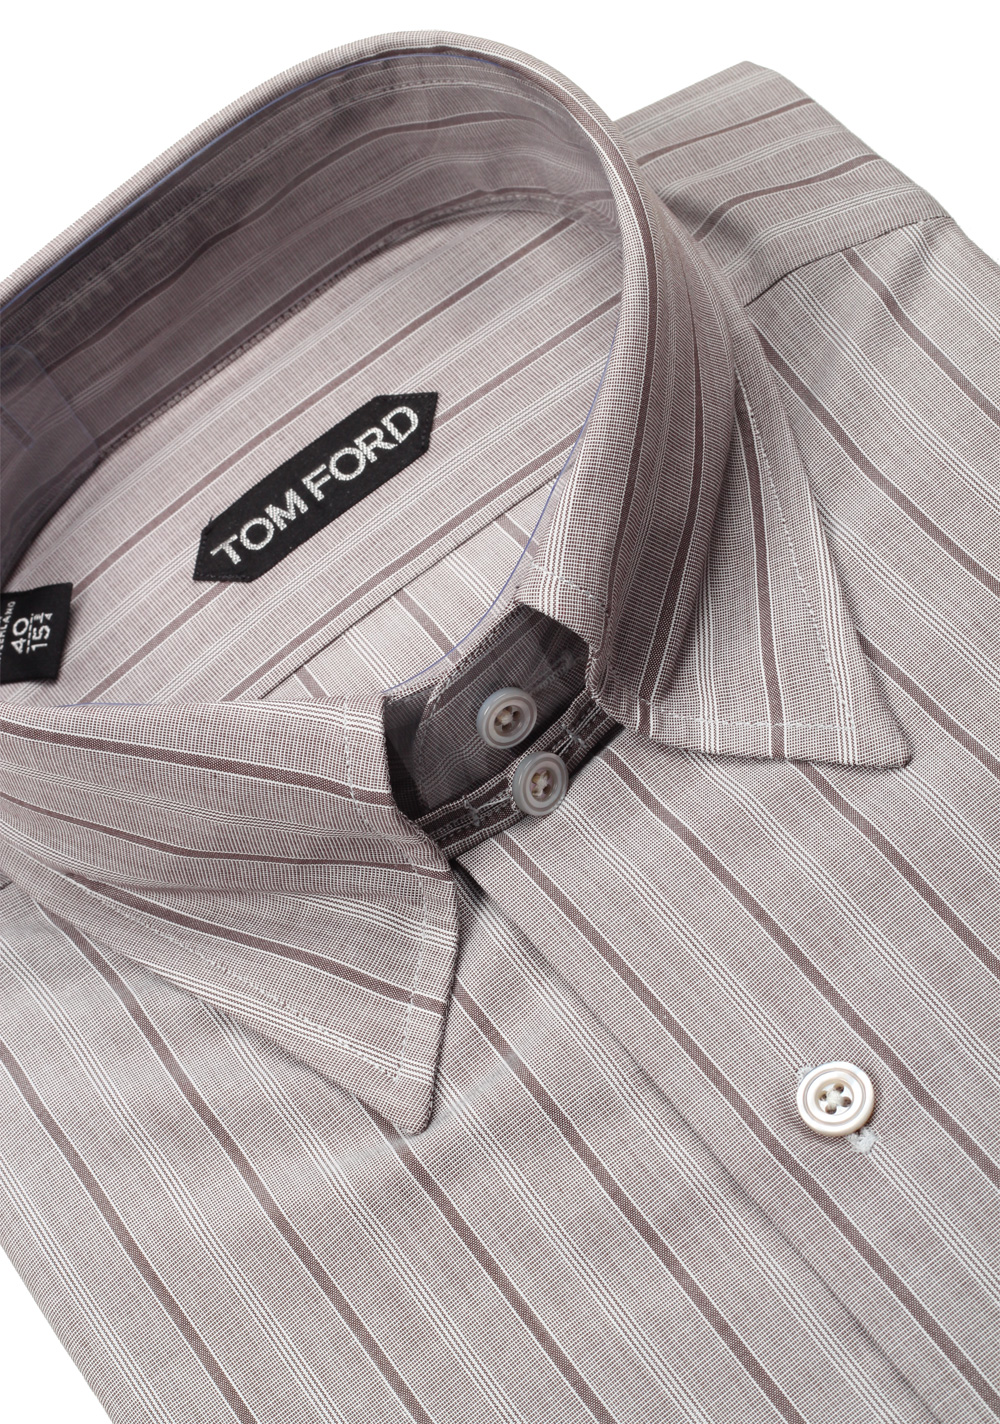 TOM FORD Striped Grayish Brown High Collar Dress Shirt Size 40 / 15,75 U.S. | Costume Limité